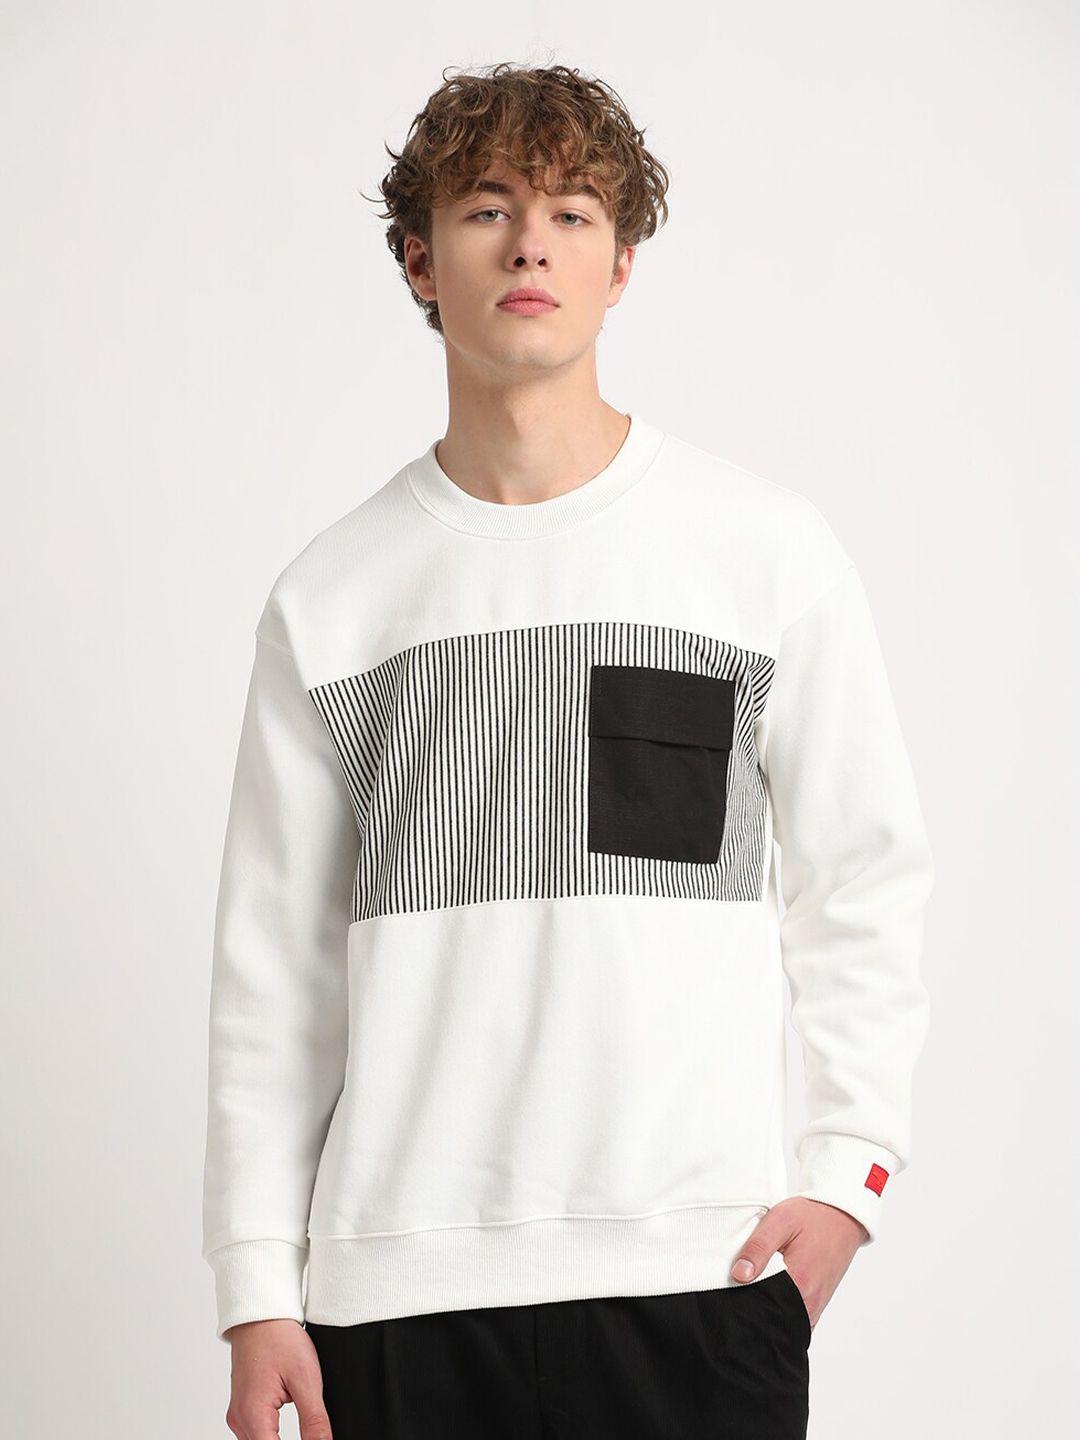 the-bear-house-men-white-printed-sweatshirt